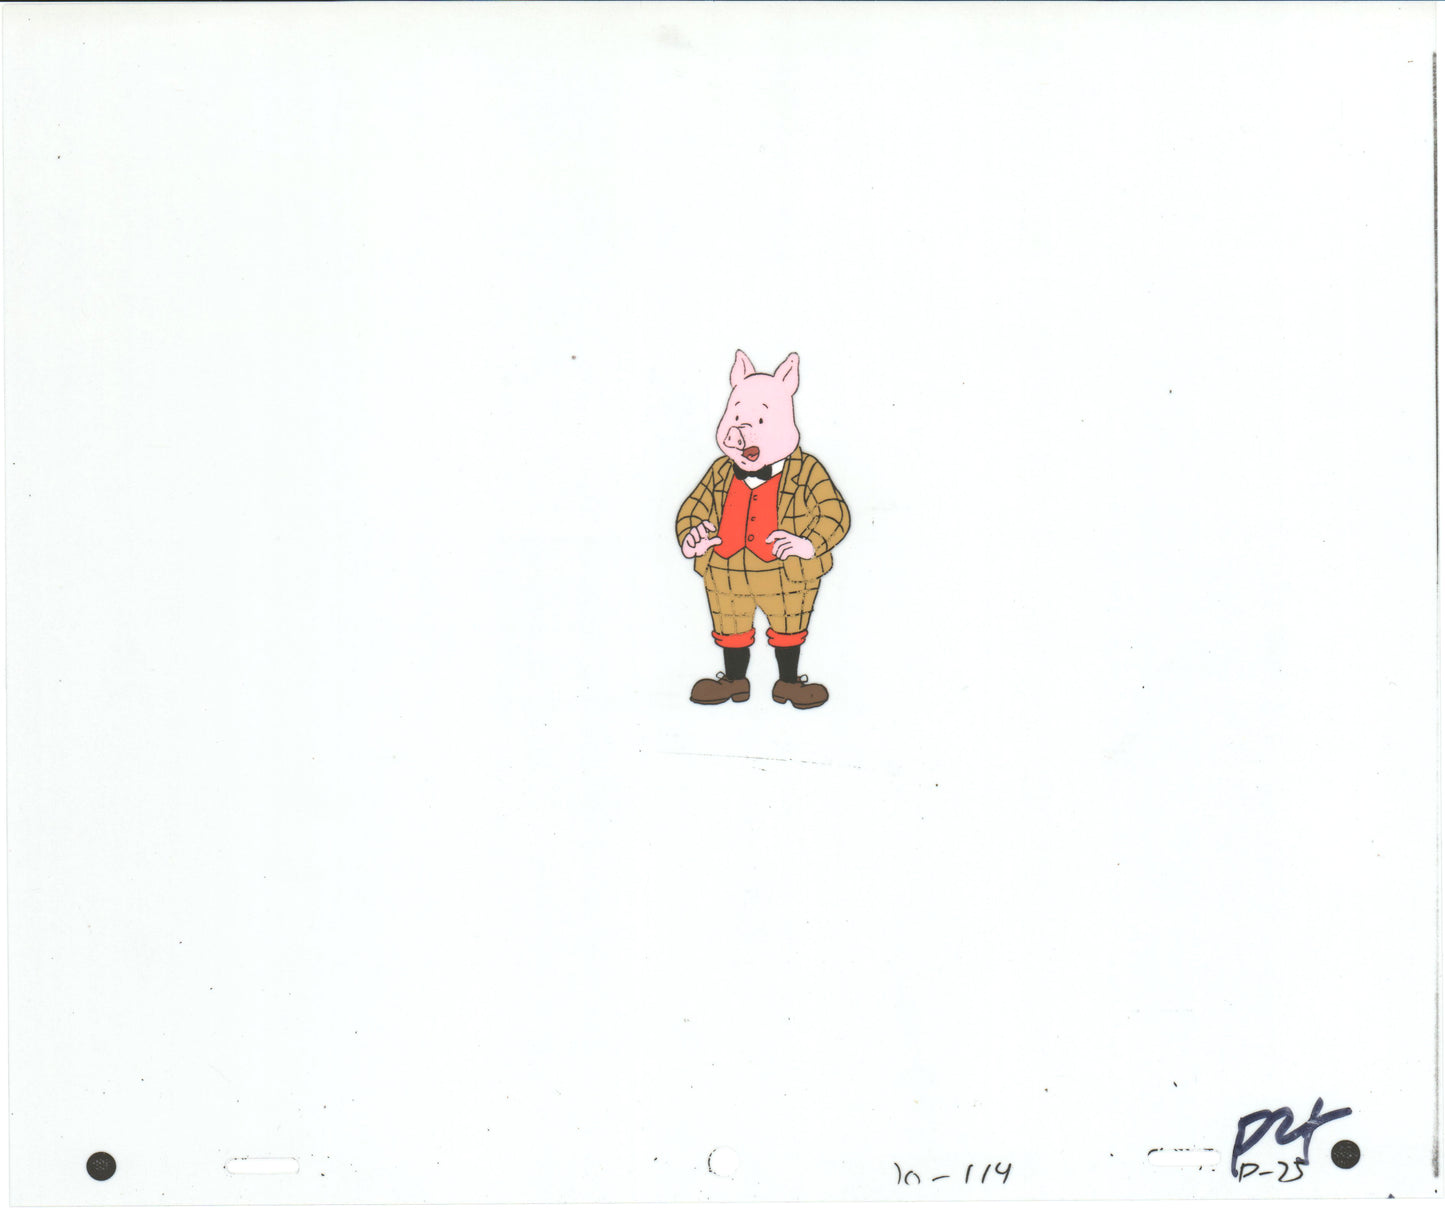 RUPERT Bear Podgy Pig Original Production Animation Cel from the Cartoon by Nelvana Tourtel Animation 1990s 8-323